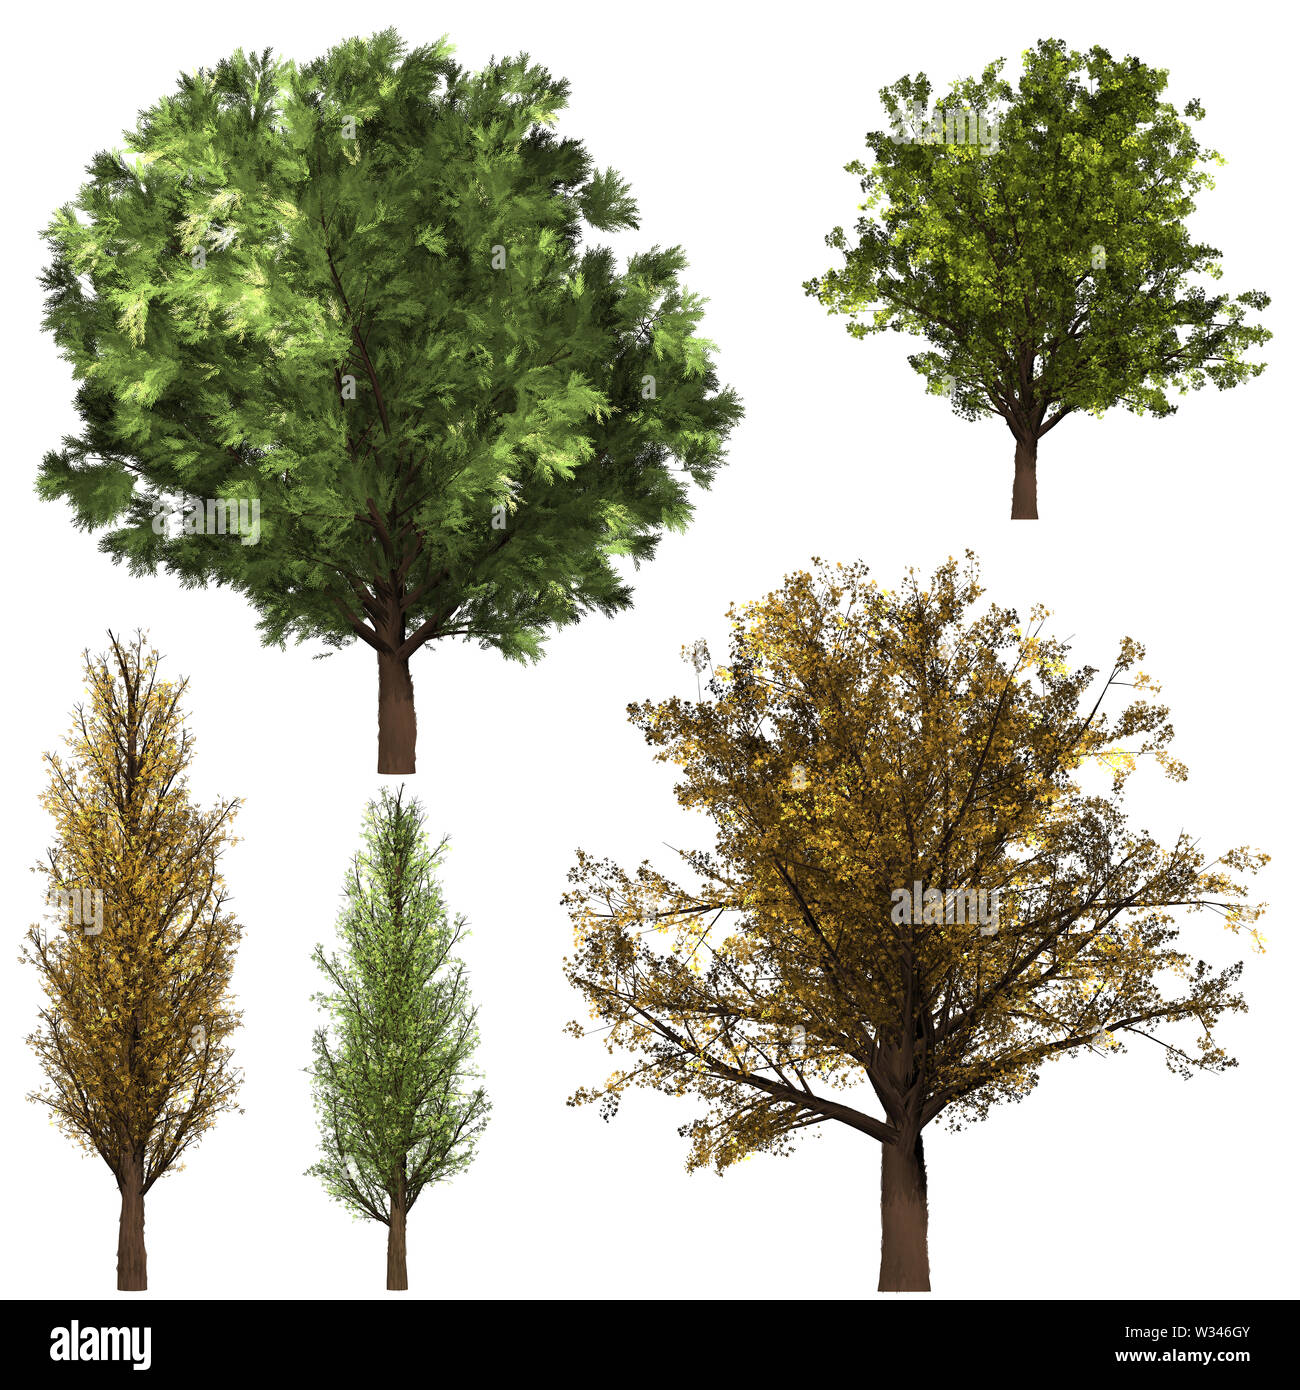 Green Forrest tree background. 2 set Illustration tree. Stock Photo